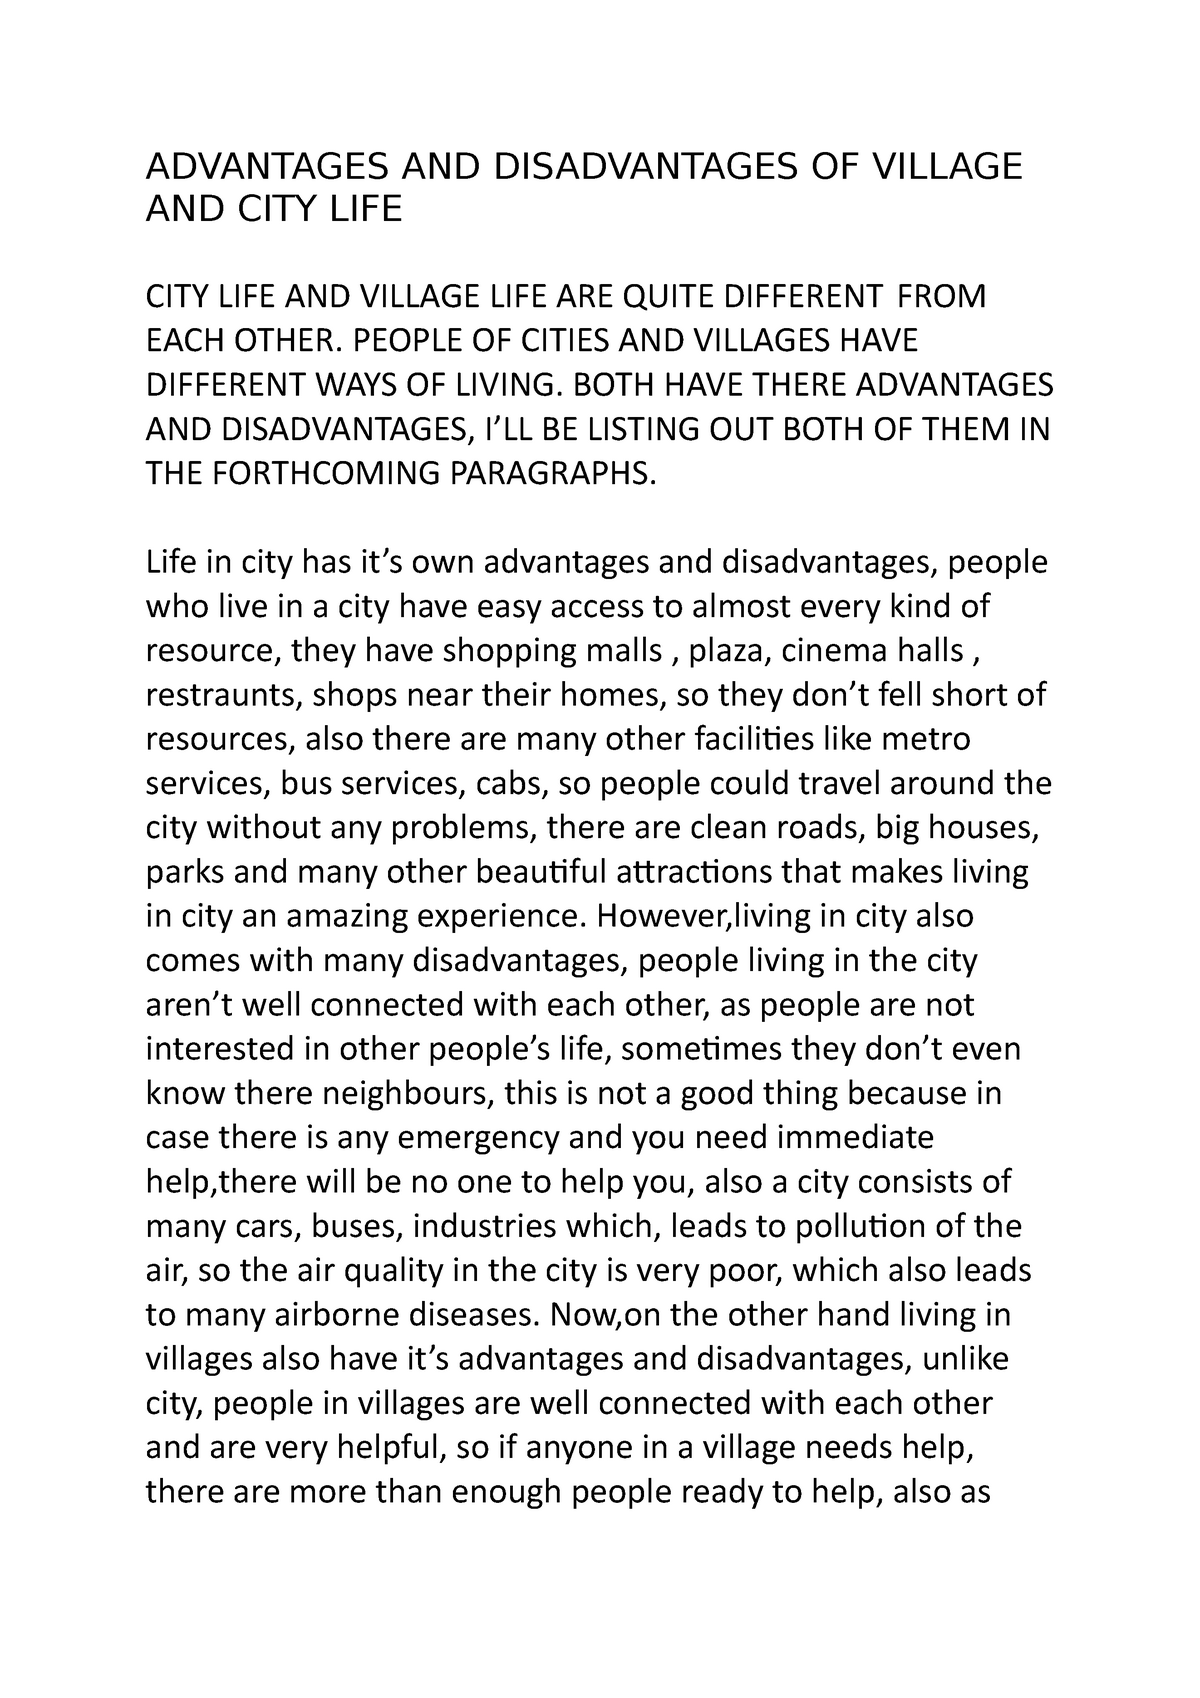 advantage of village life vs city life